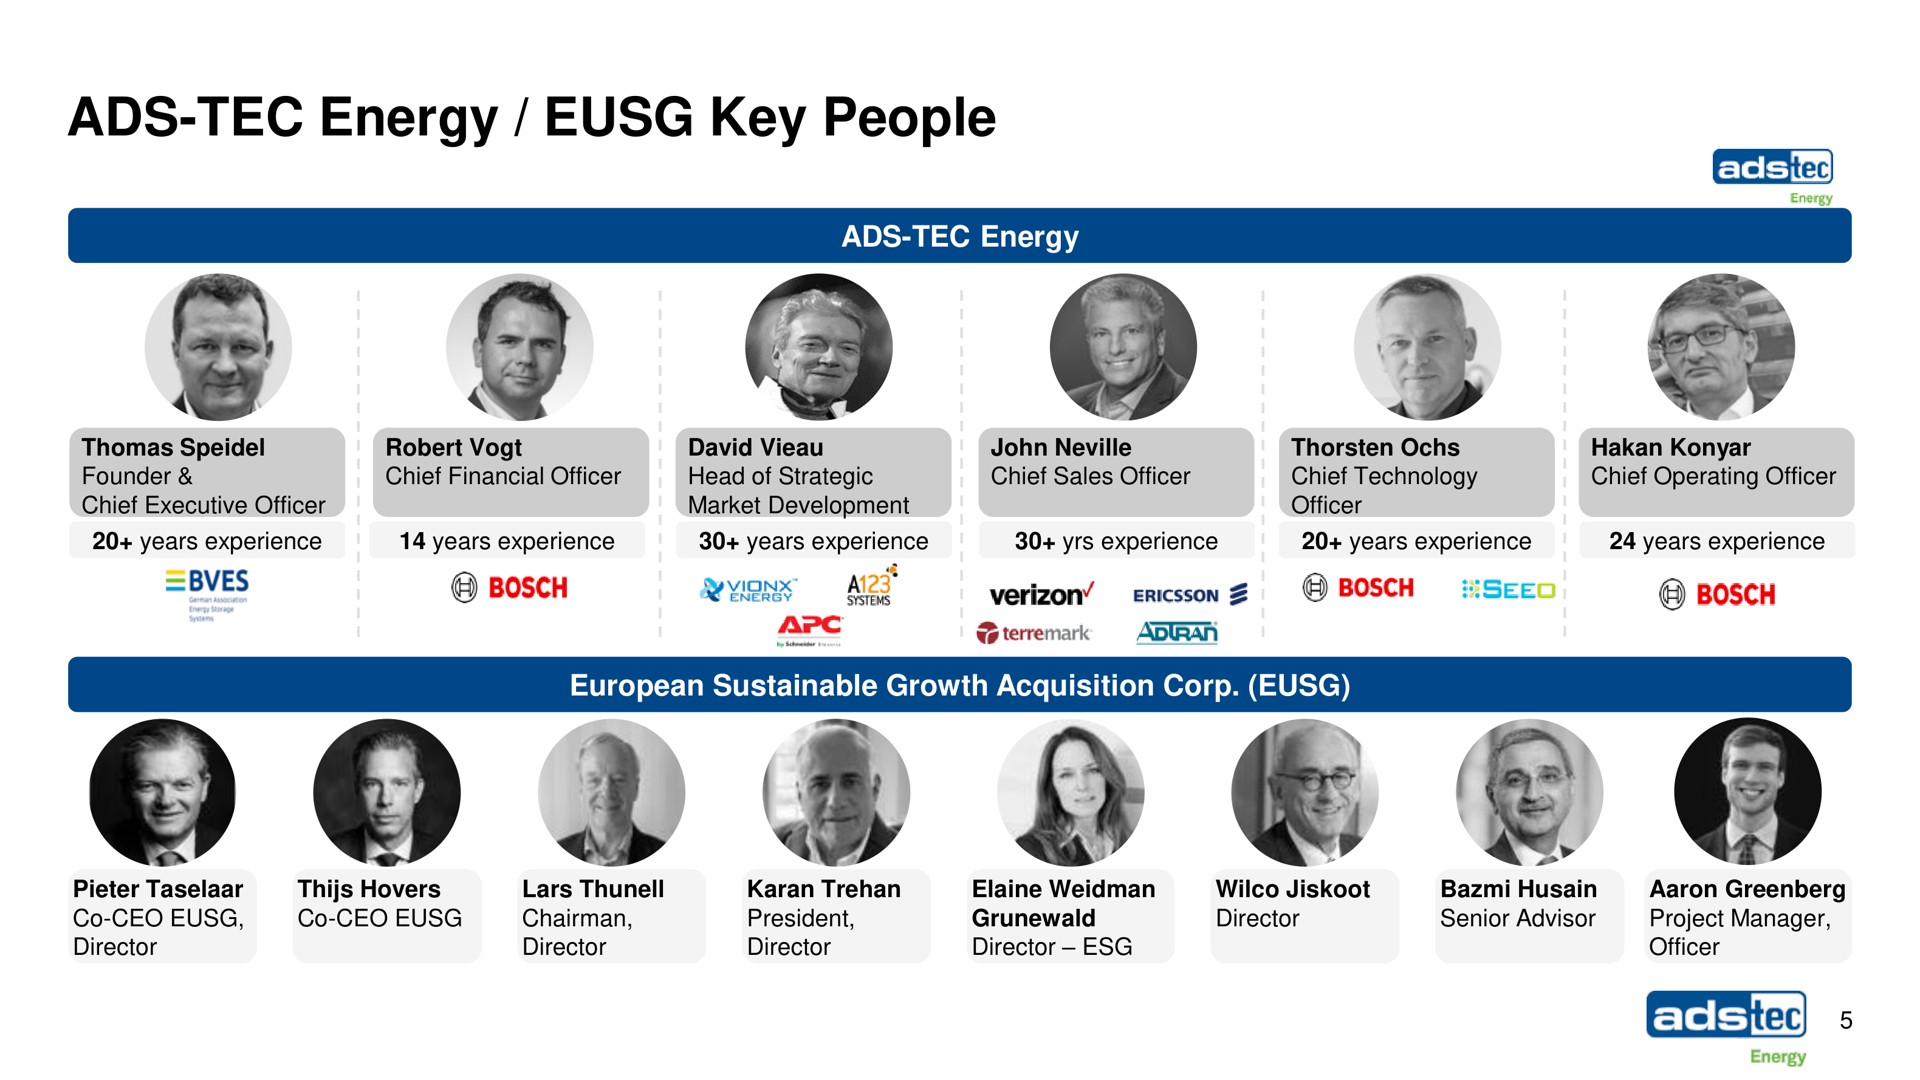 ads tec energy key people | ads-tec Energy